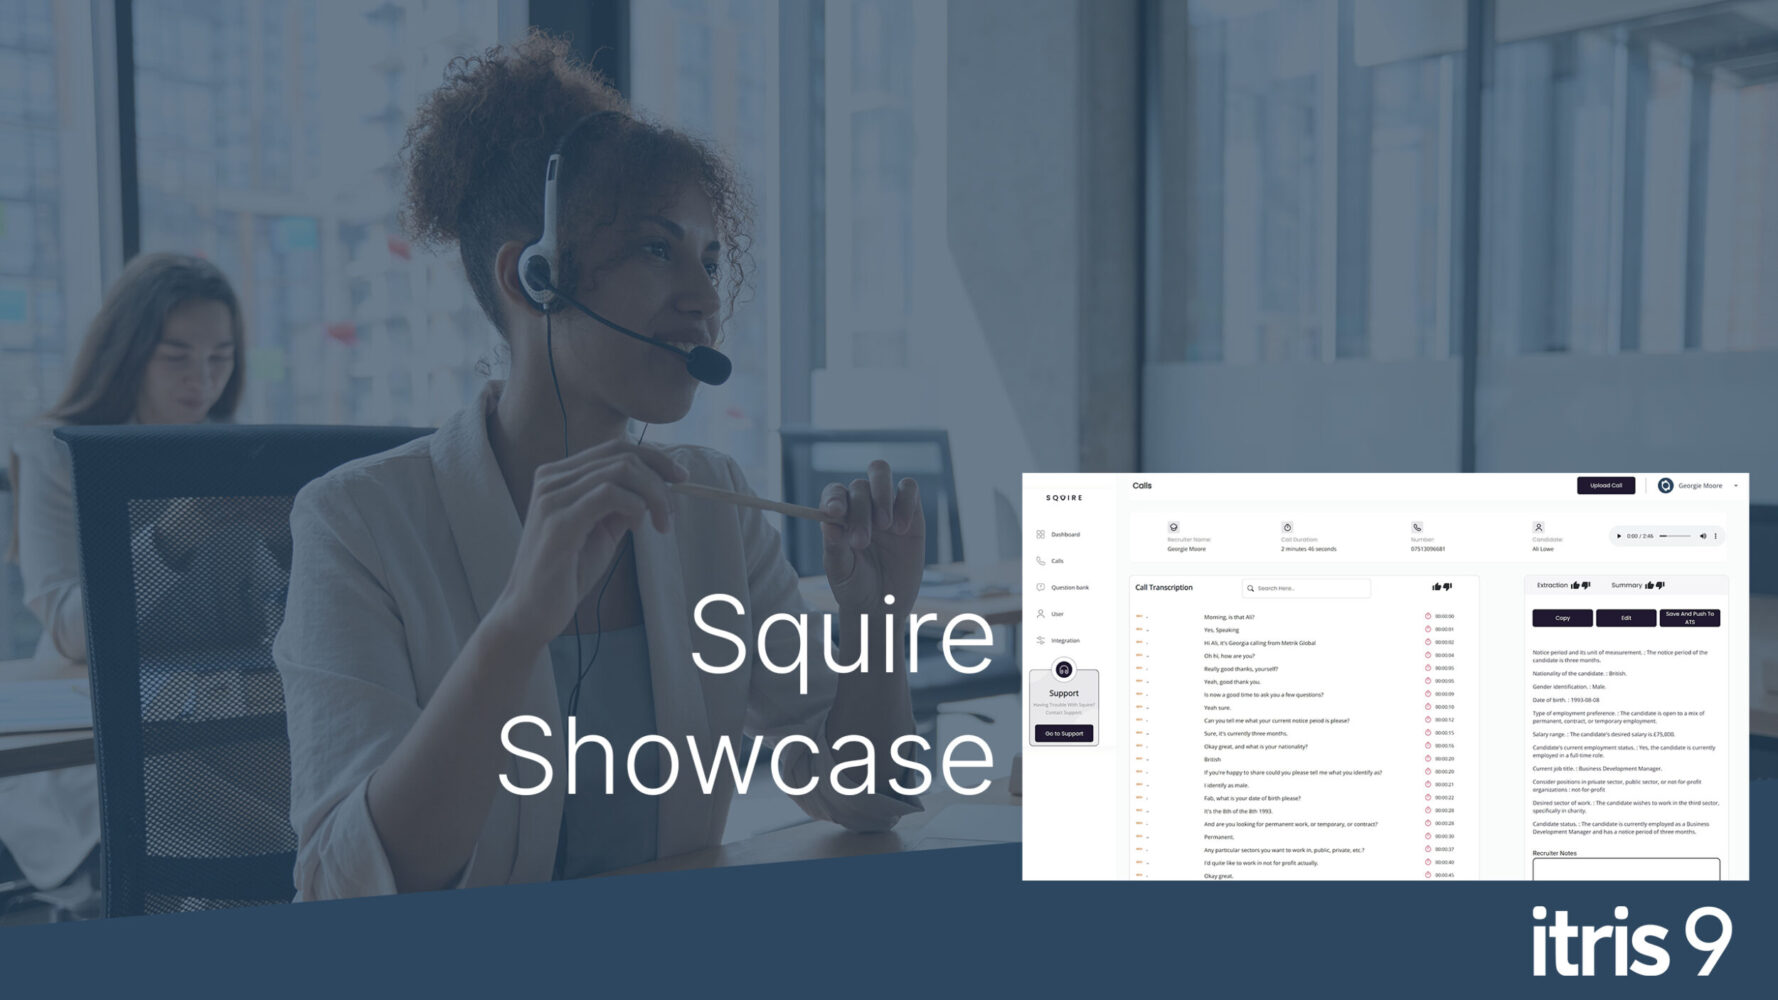 Recruitment CRM software itris 9 - Squire Showcase Video